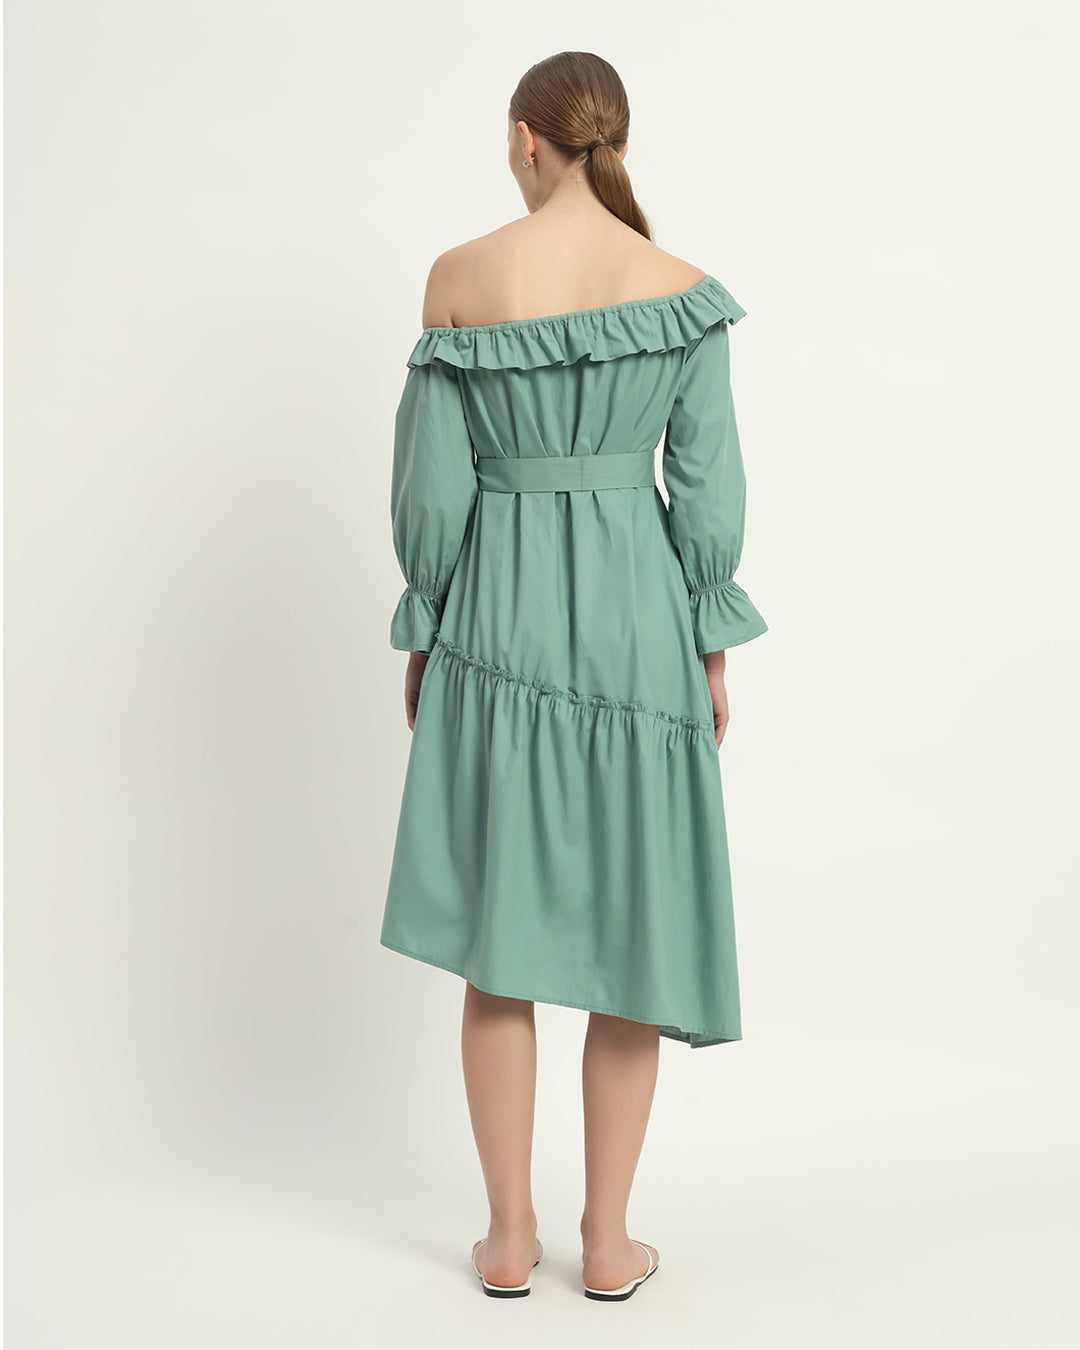 The Mint Stellata Cotton Dress